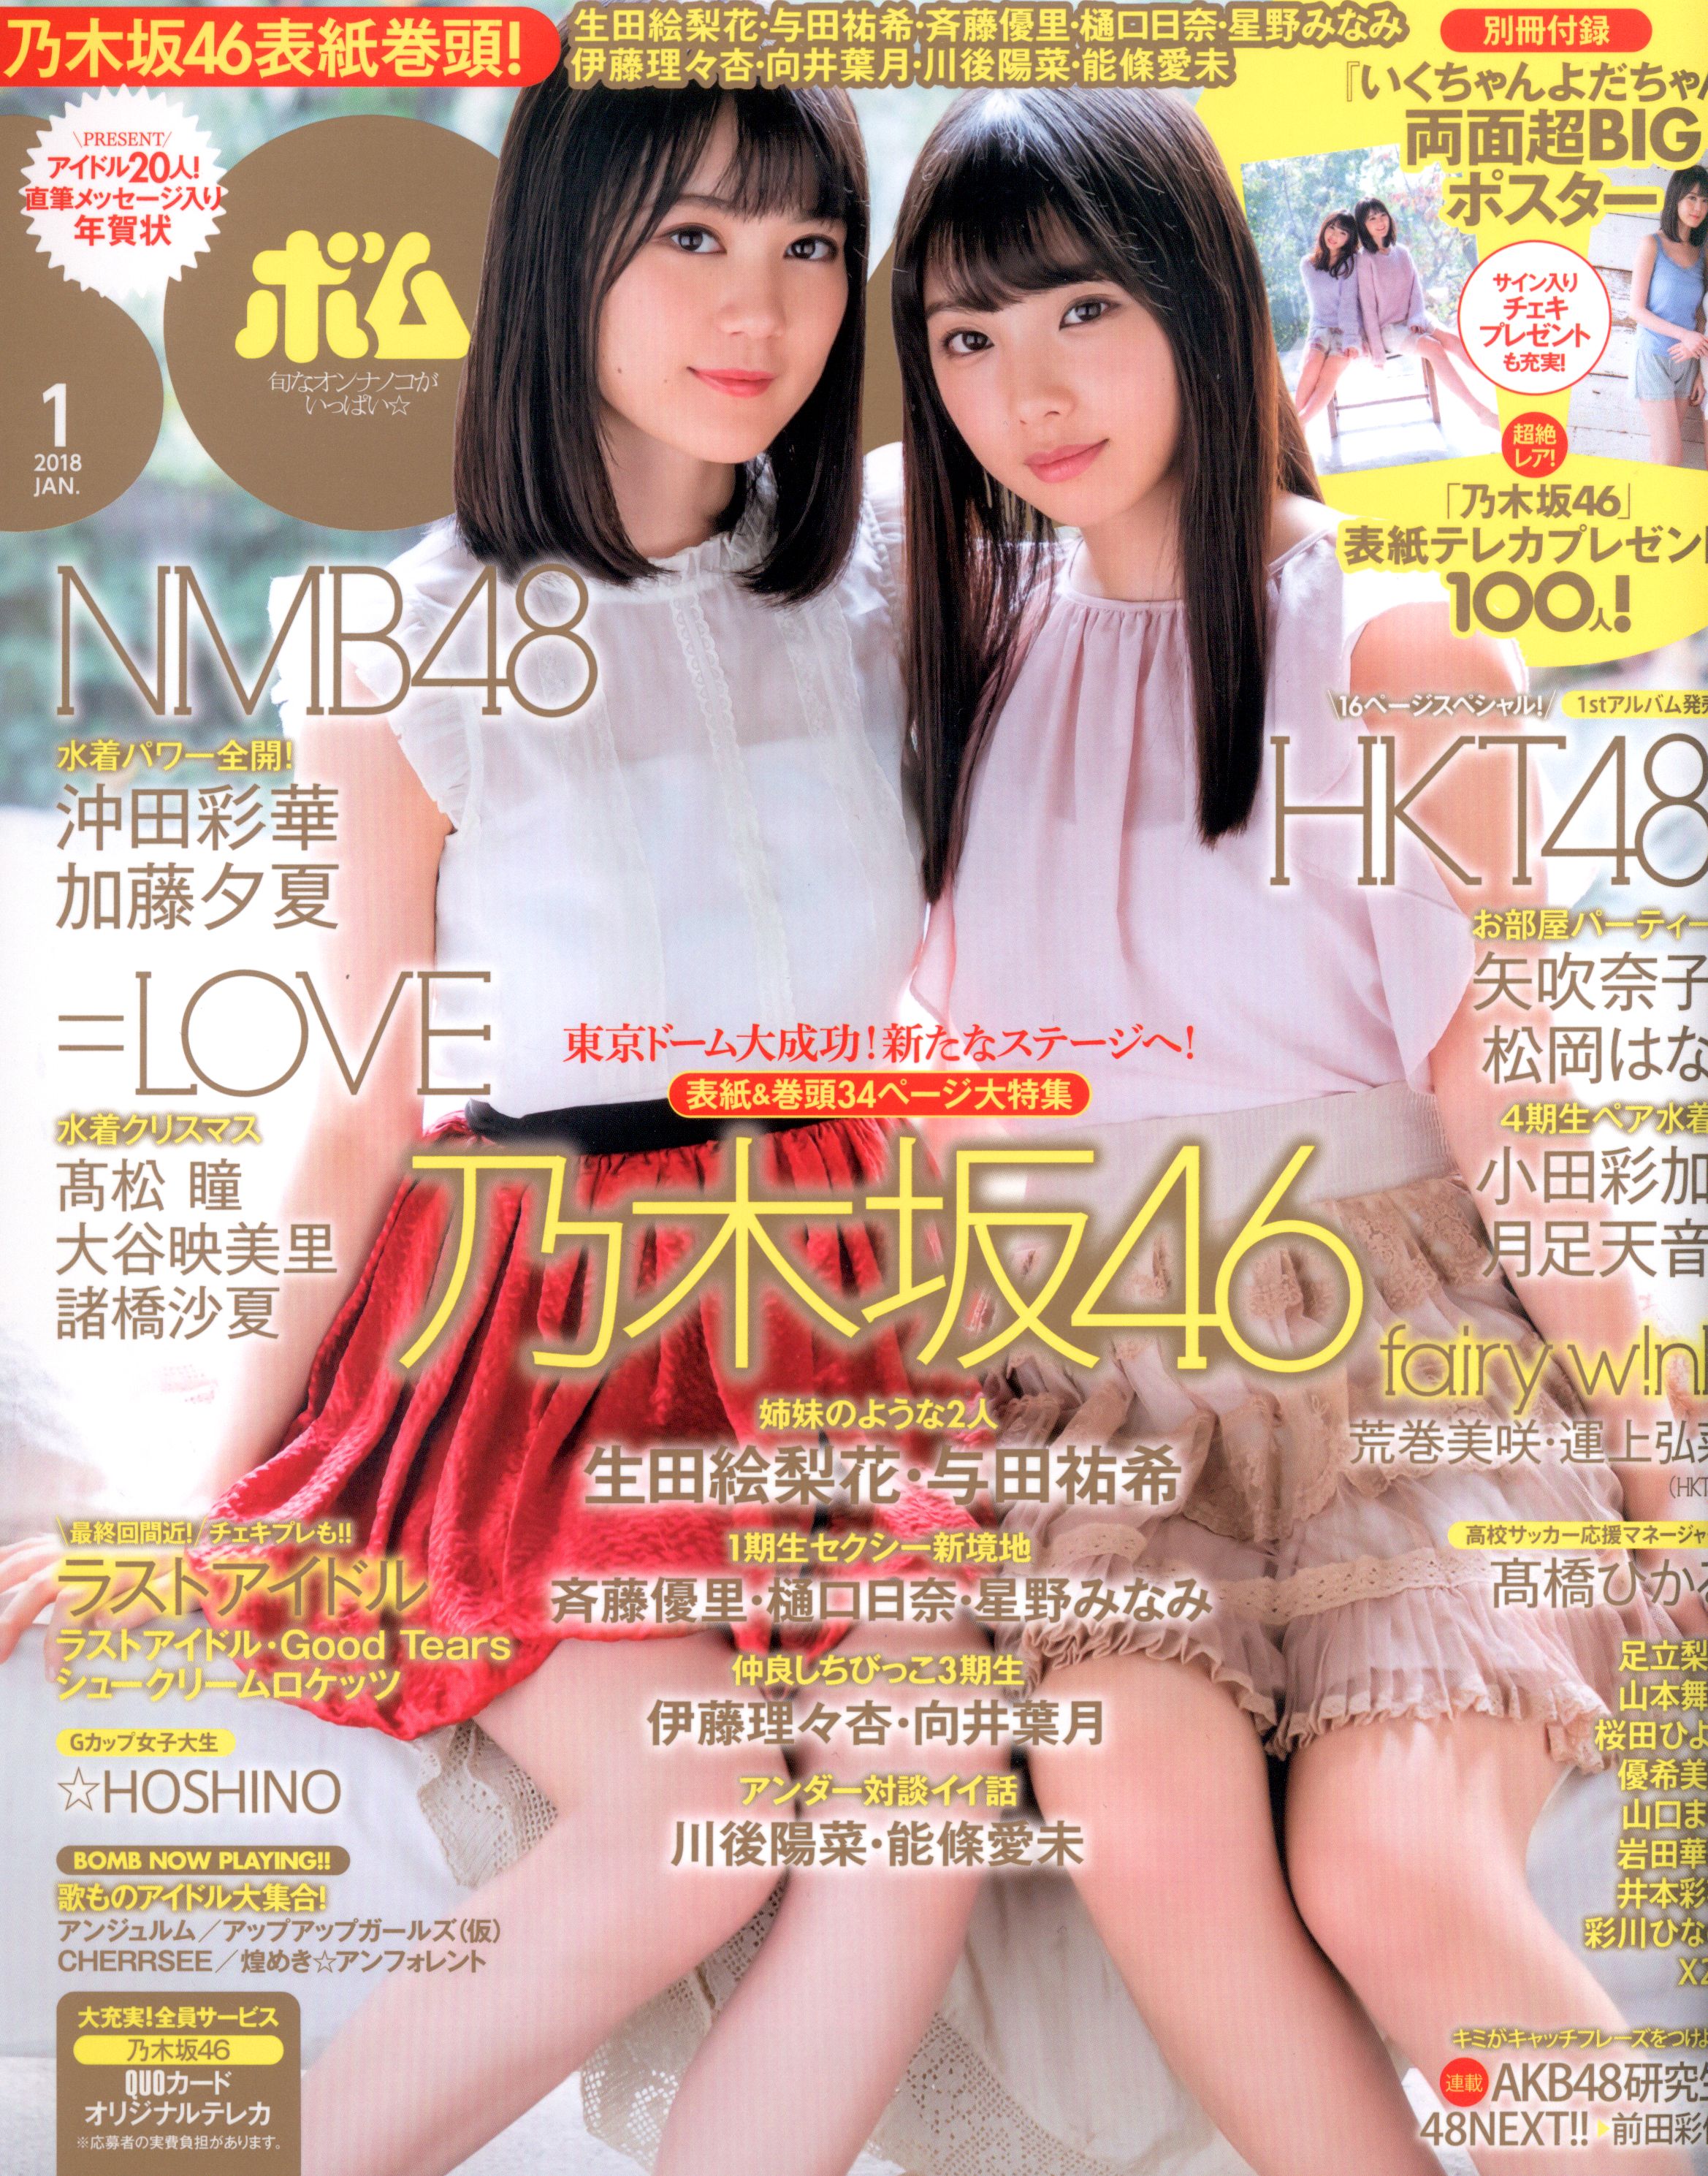 Gakushu Kenkyusha Gakken 18 Year January Issue Bomb 18 Year January Issue 455 Mandarake Online Shop